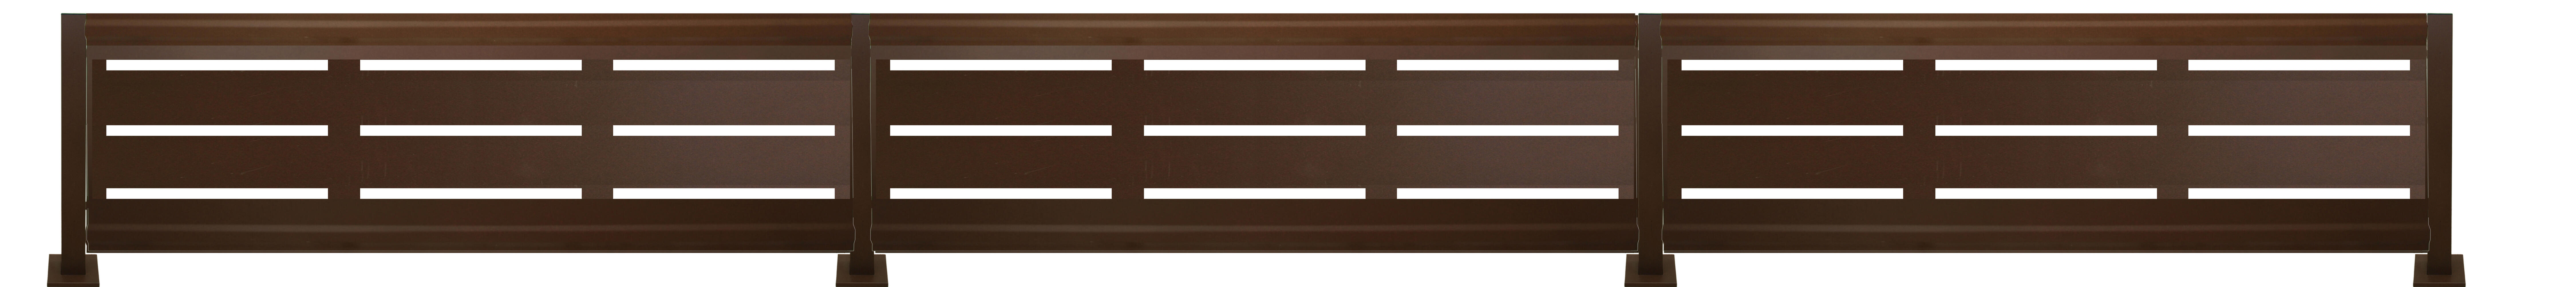 Kit valla de acero galvanizado rayas marrón forja 456x50x13 cm